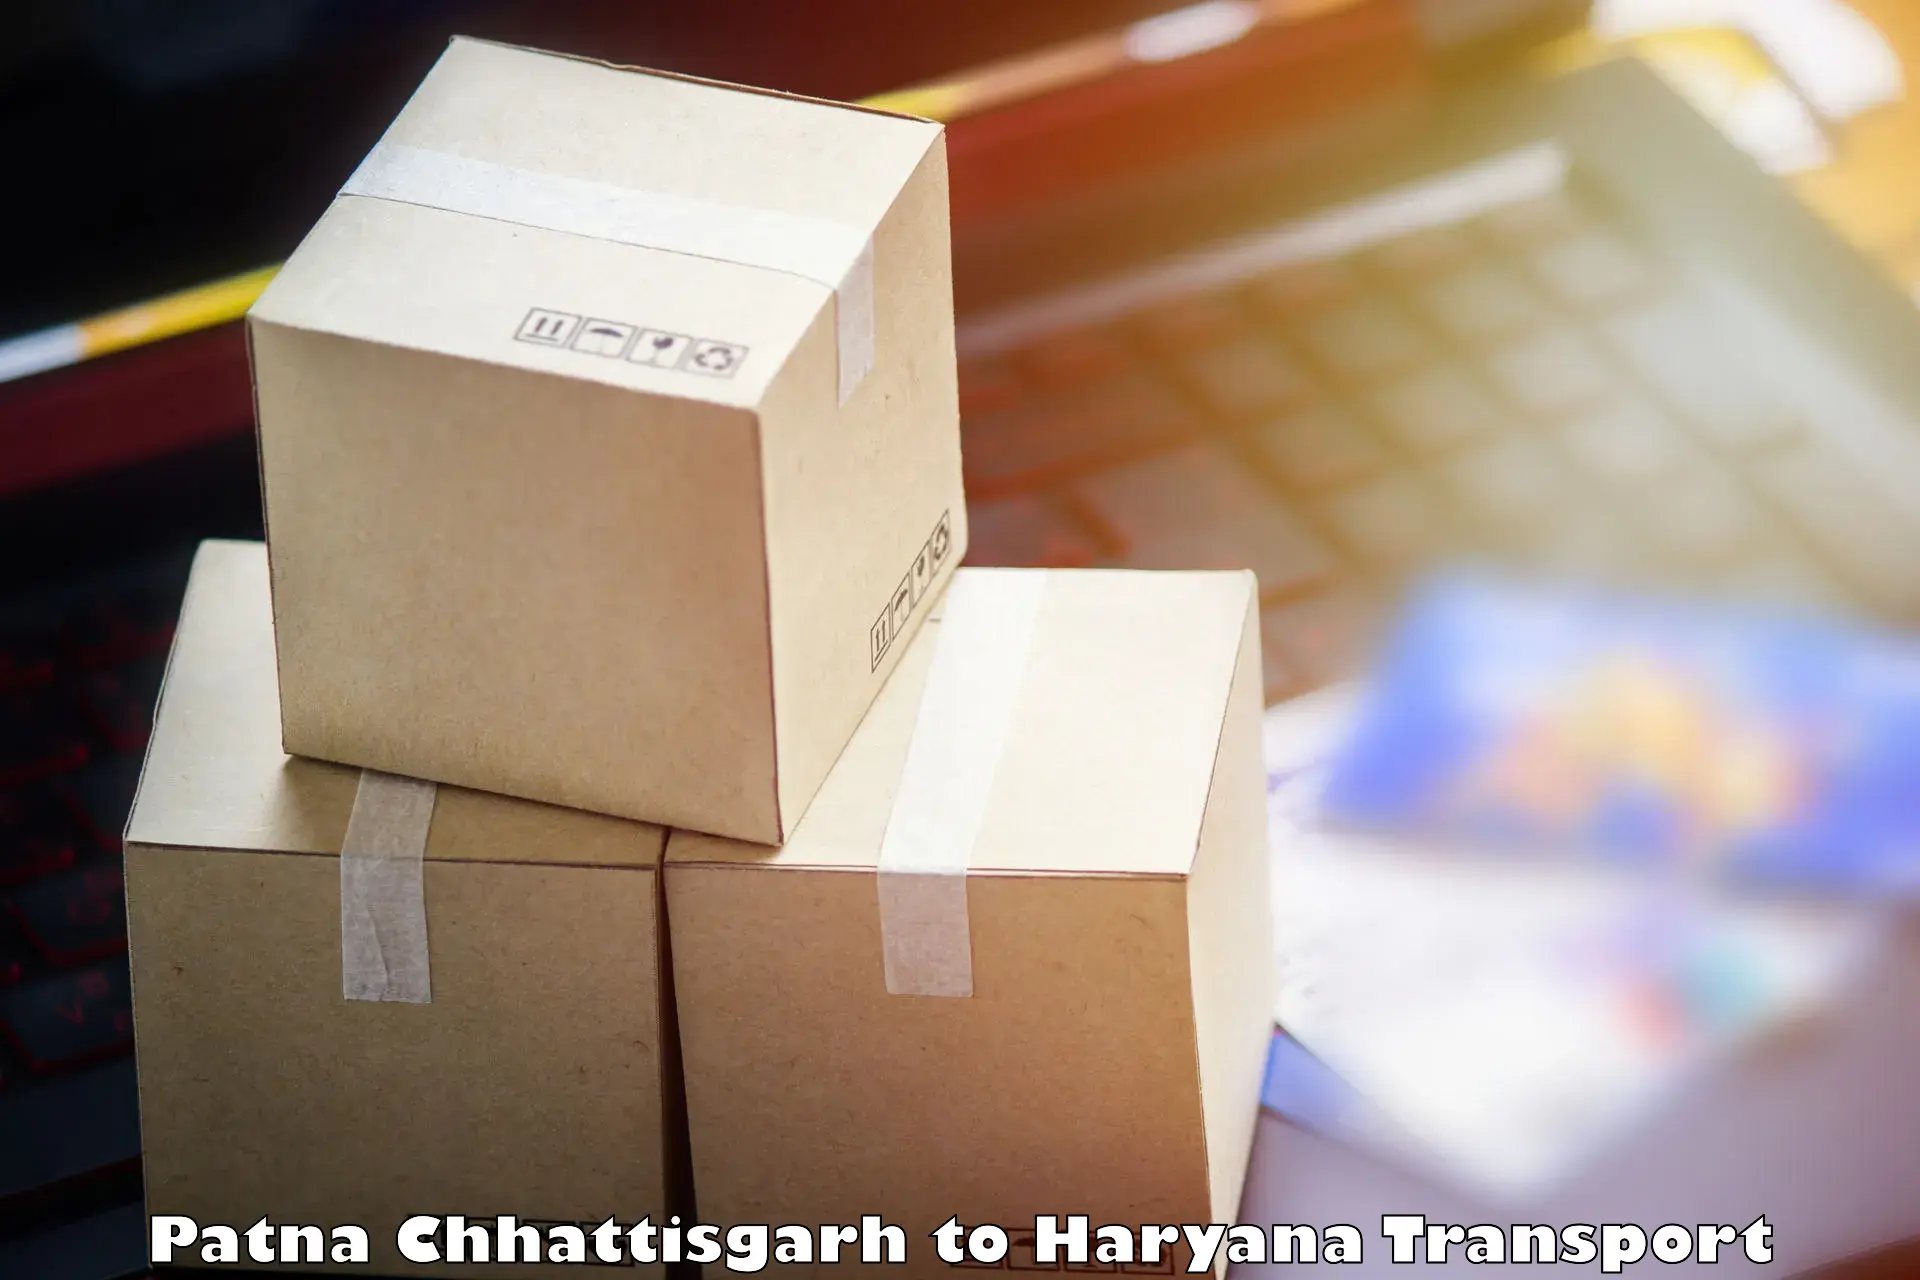 Furniture transport service Patna Chhattisgarh to Dharuhera